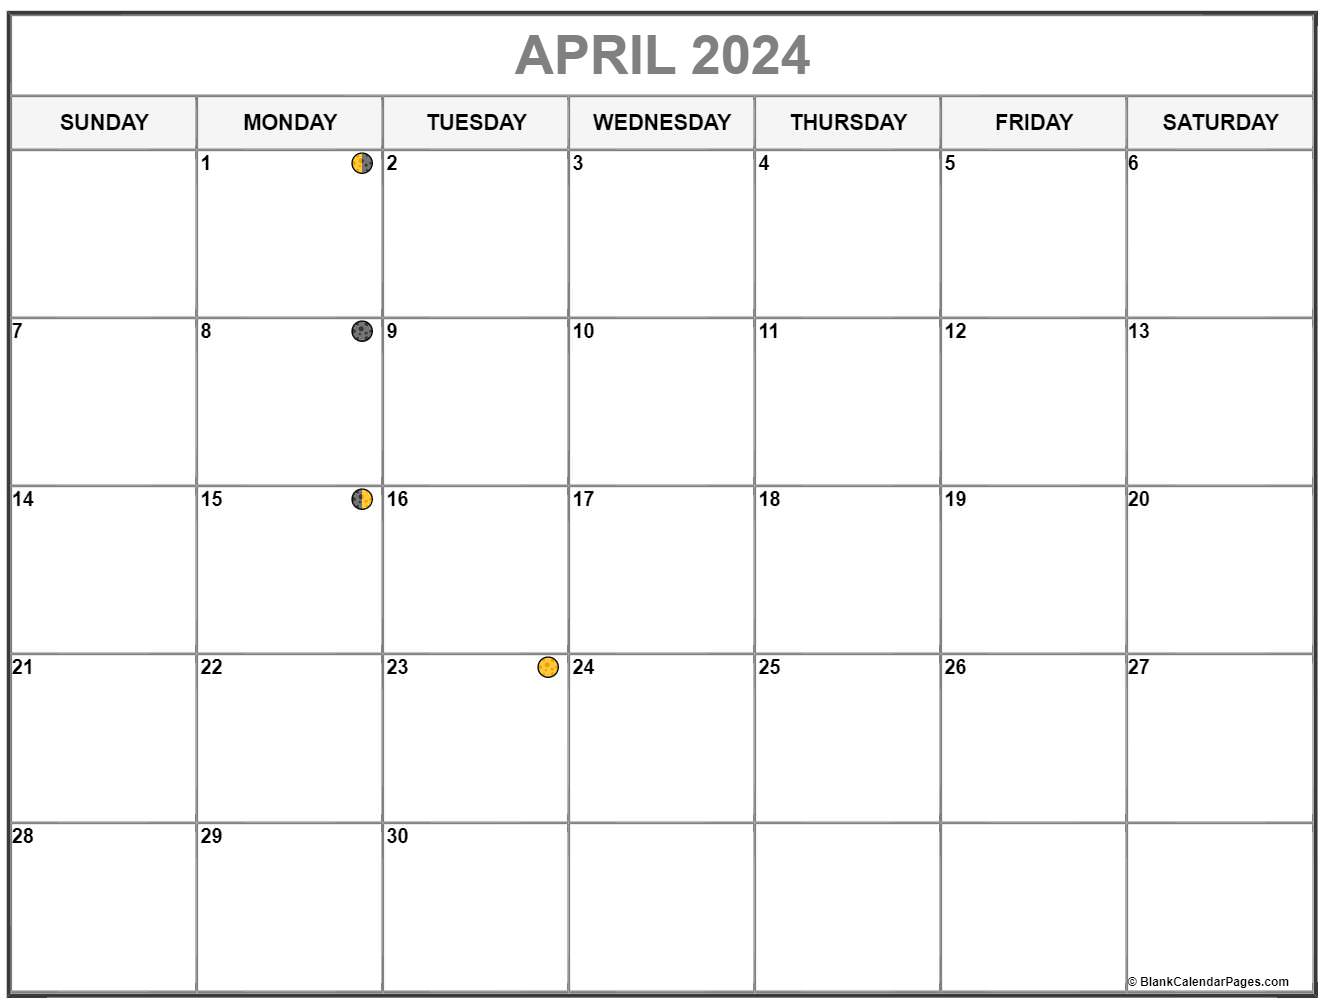 April 2024 Lunar Calendar Moon Phase Calendar